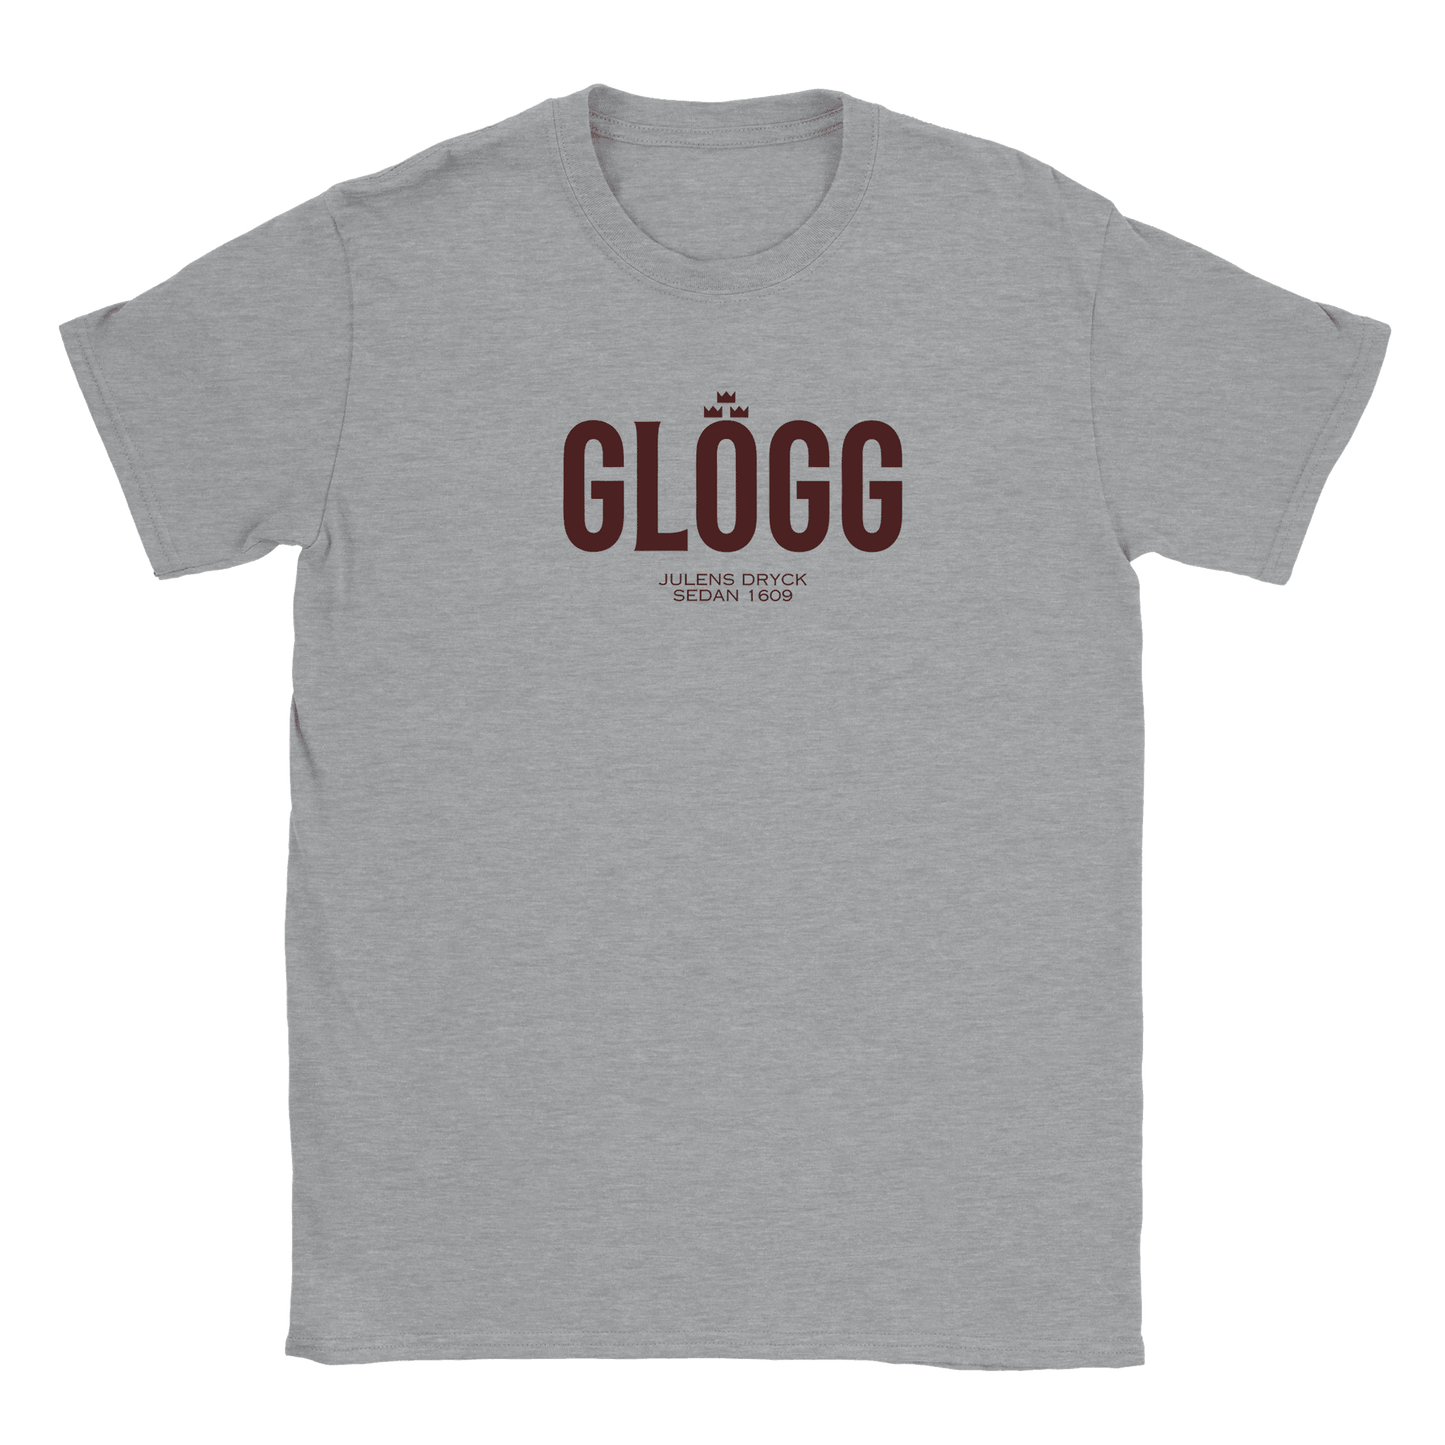 Glögg - T-shirt Grå